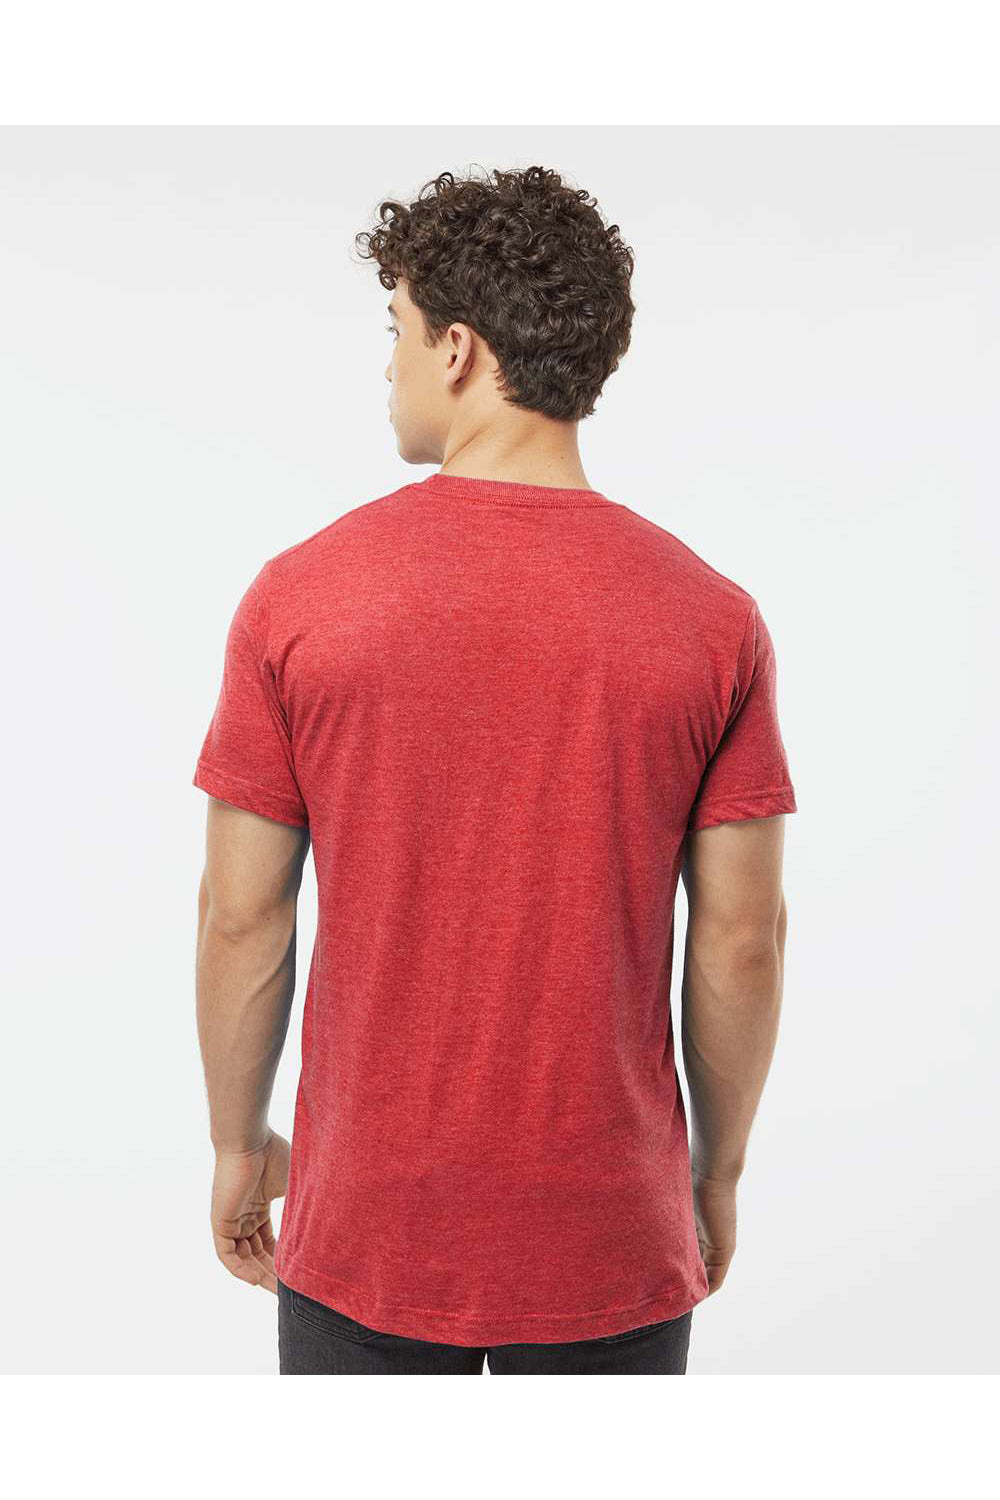 Tultex 202 Mens Fine Jersey Short Sleeve Crewneck T-Shirt Heather Red Model Back